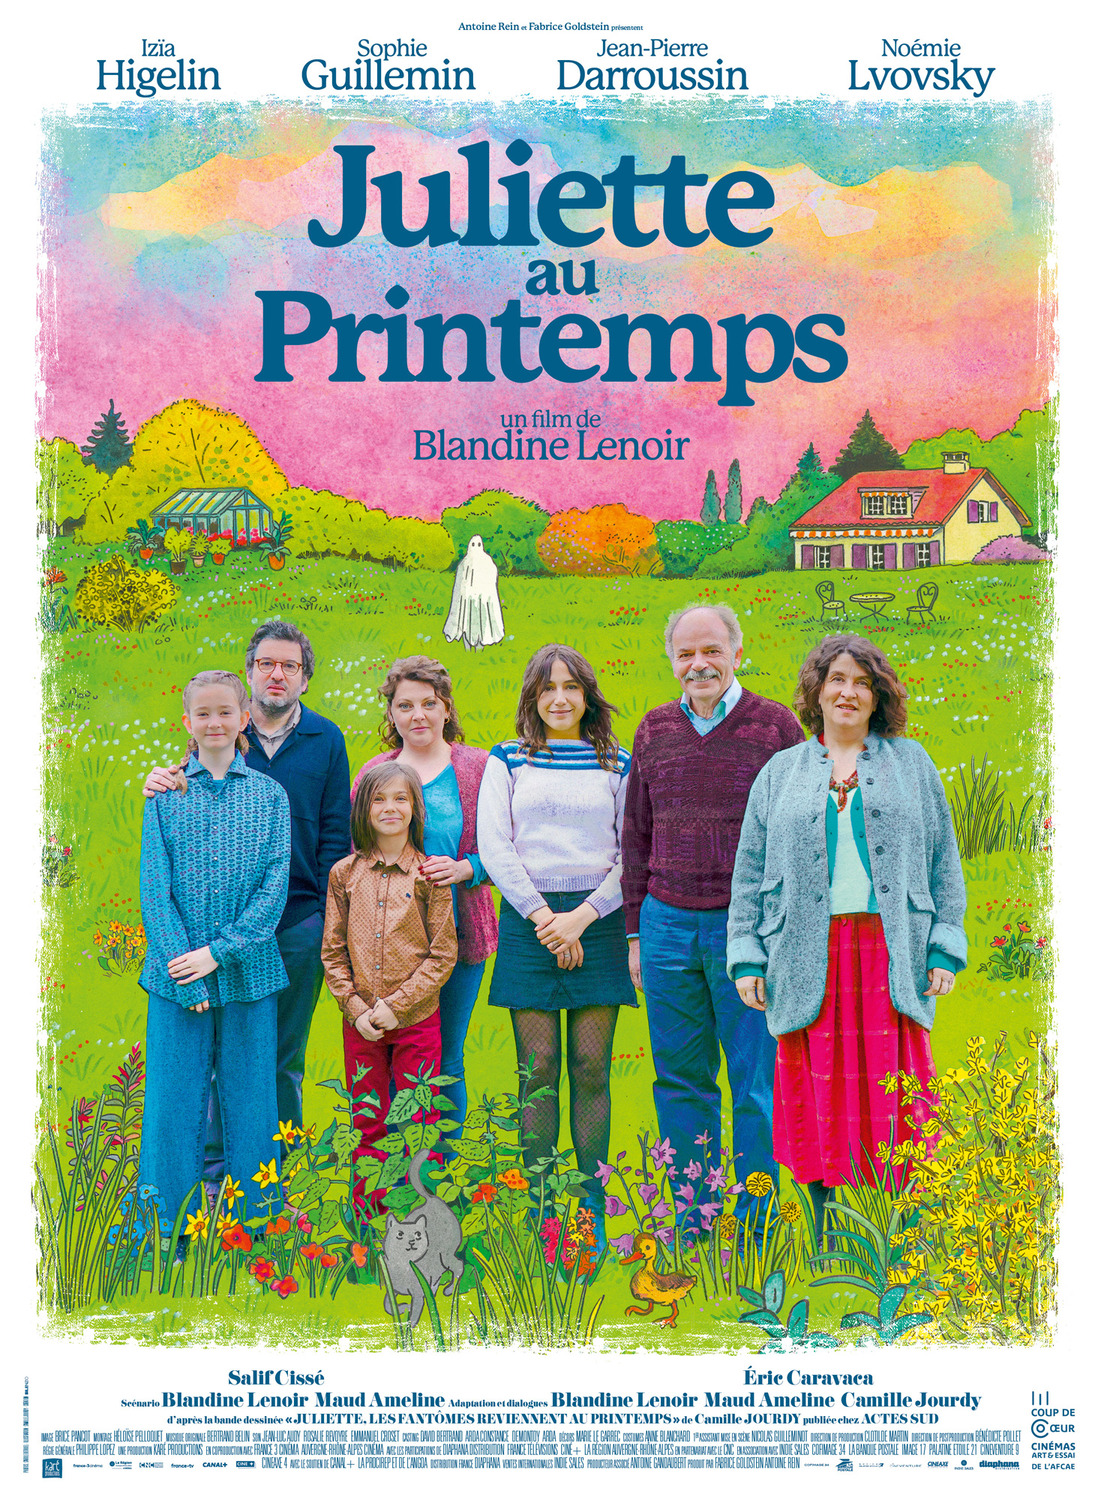 Extra Large Movie Poster Image for Juliette au printemps 